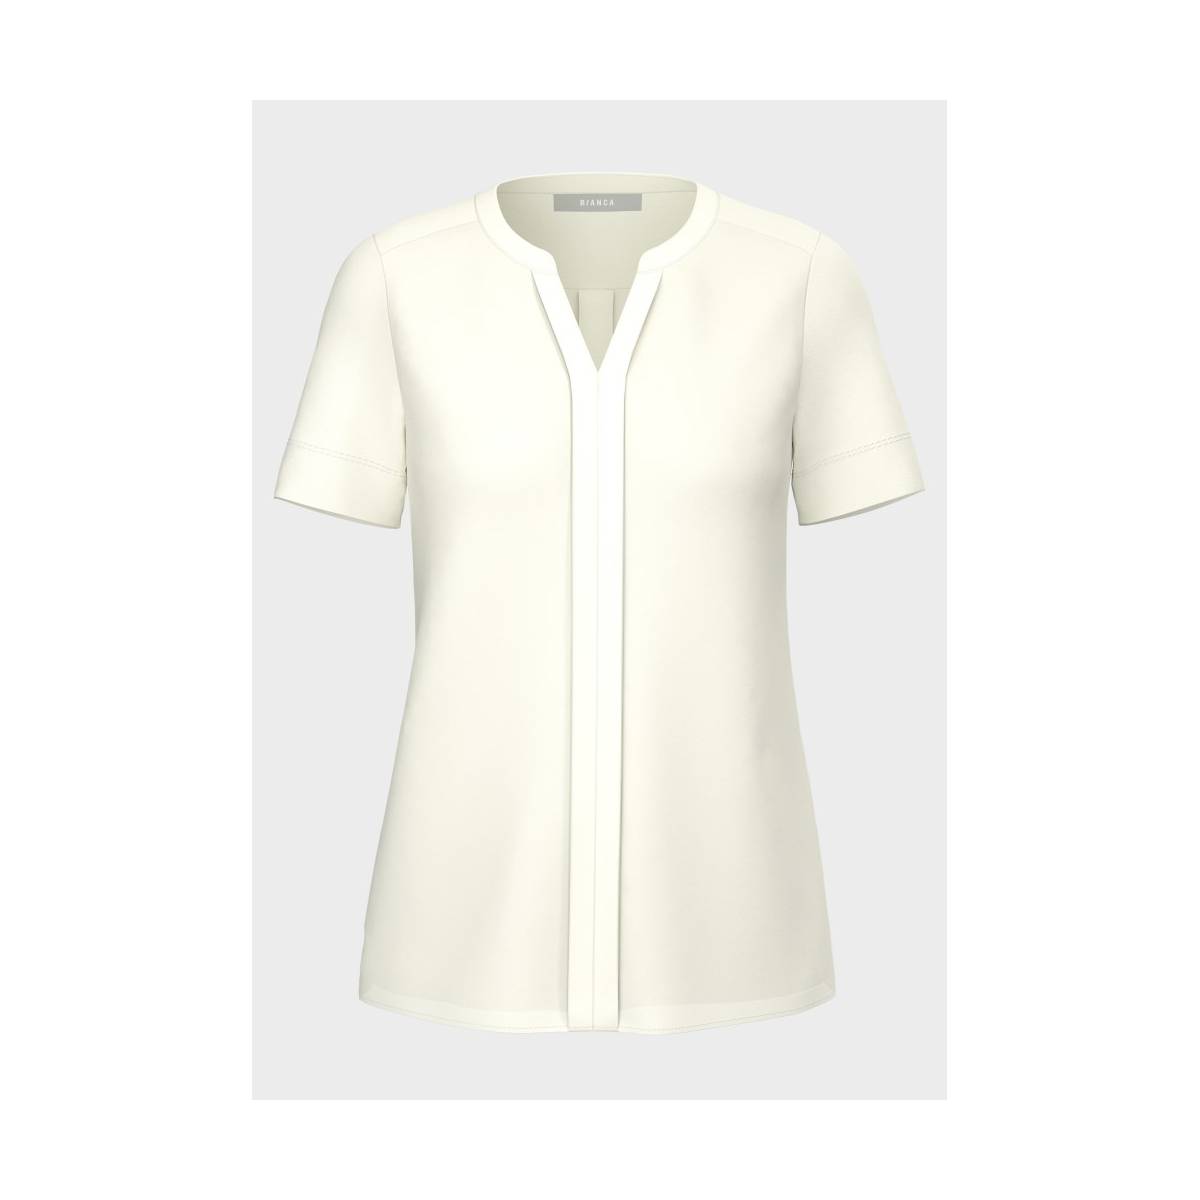 BIANCA  t shirts ecru -  model 36252 - Dameskleding t shirts ecru